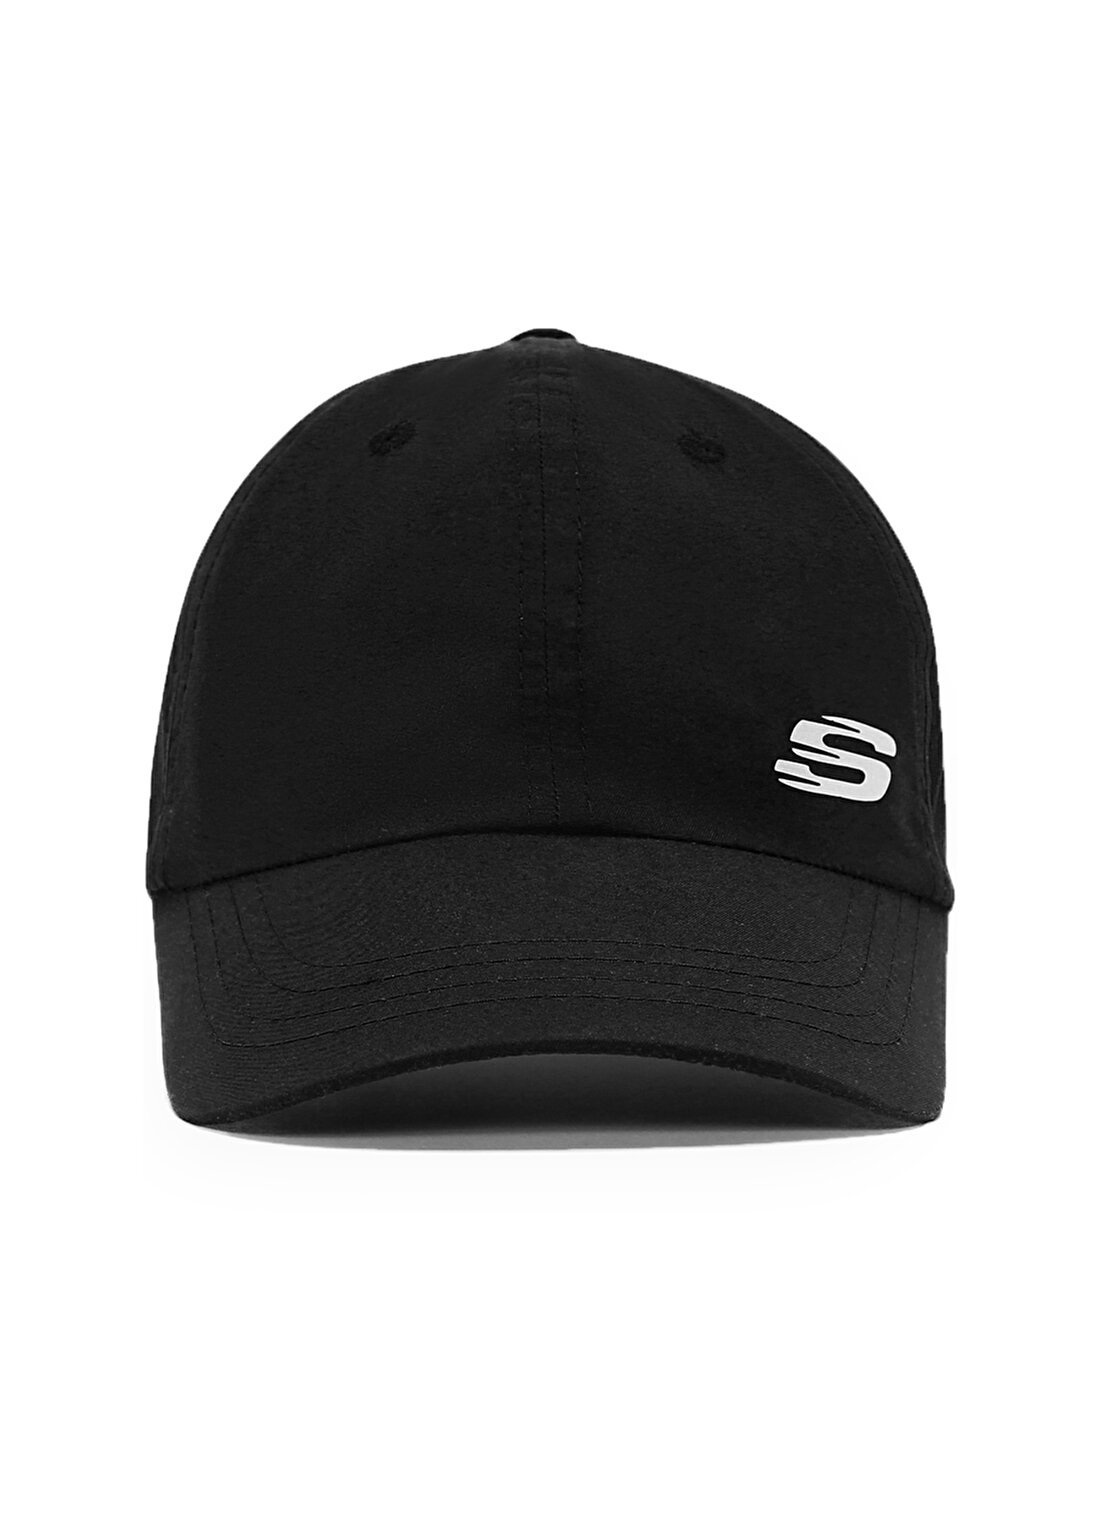 Skechers Siyah Unisex Şapka S231481-001 M Summer Acc Cap Cap